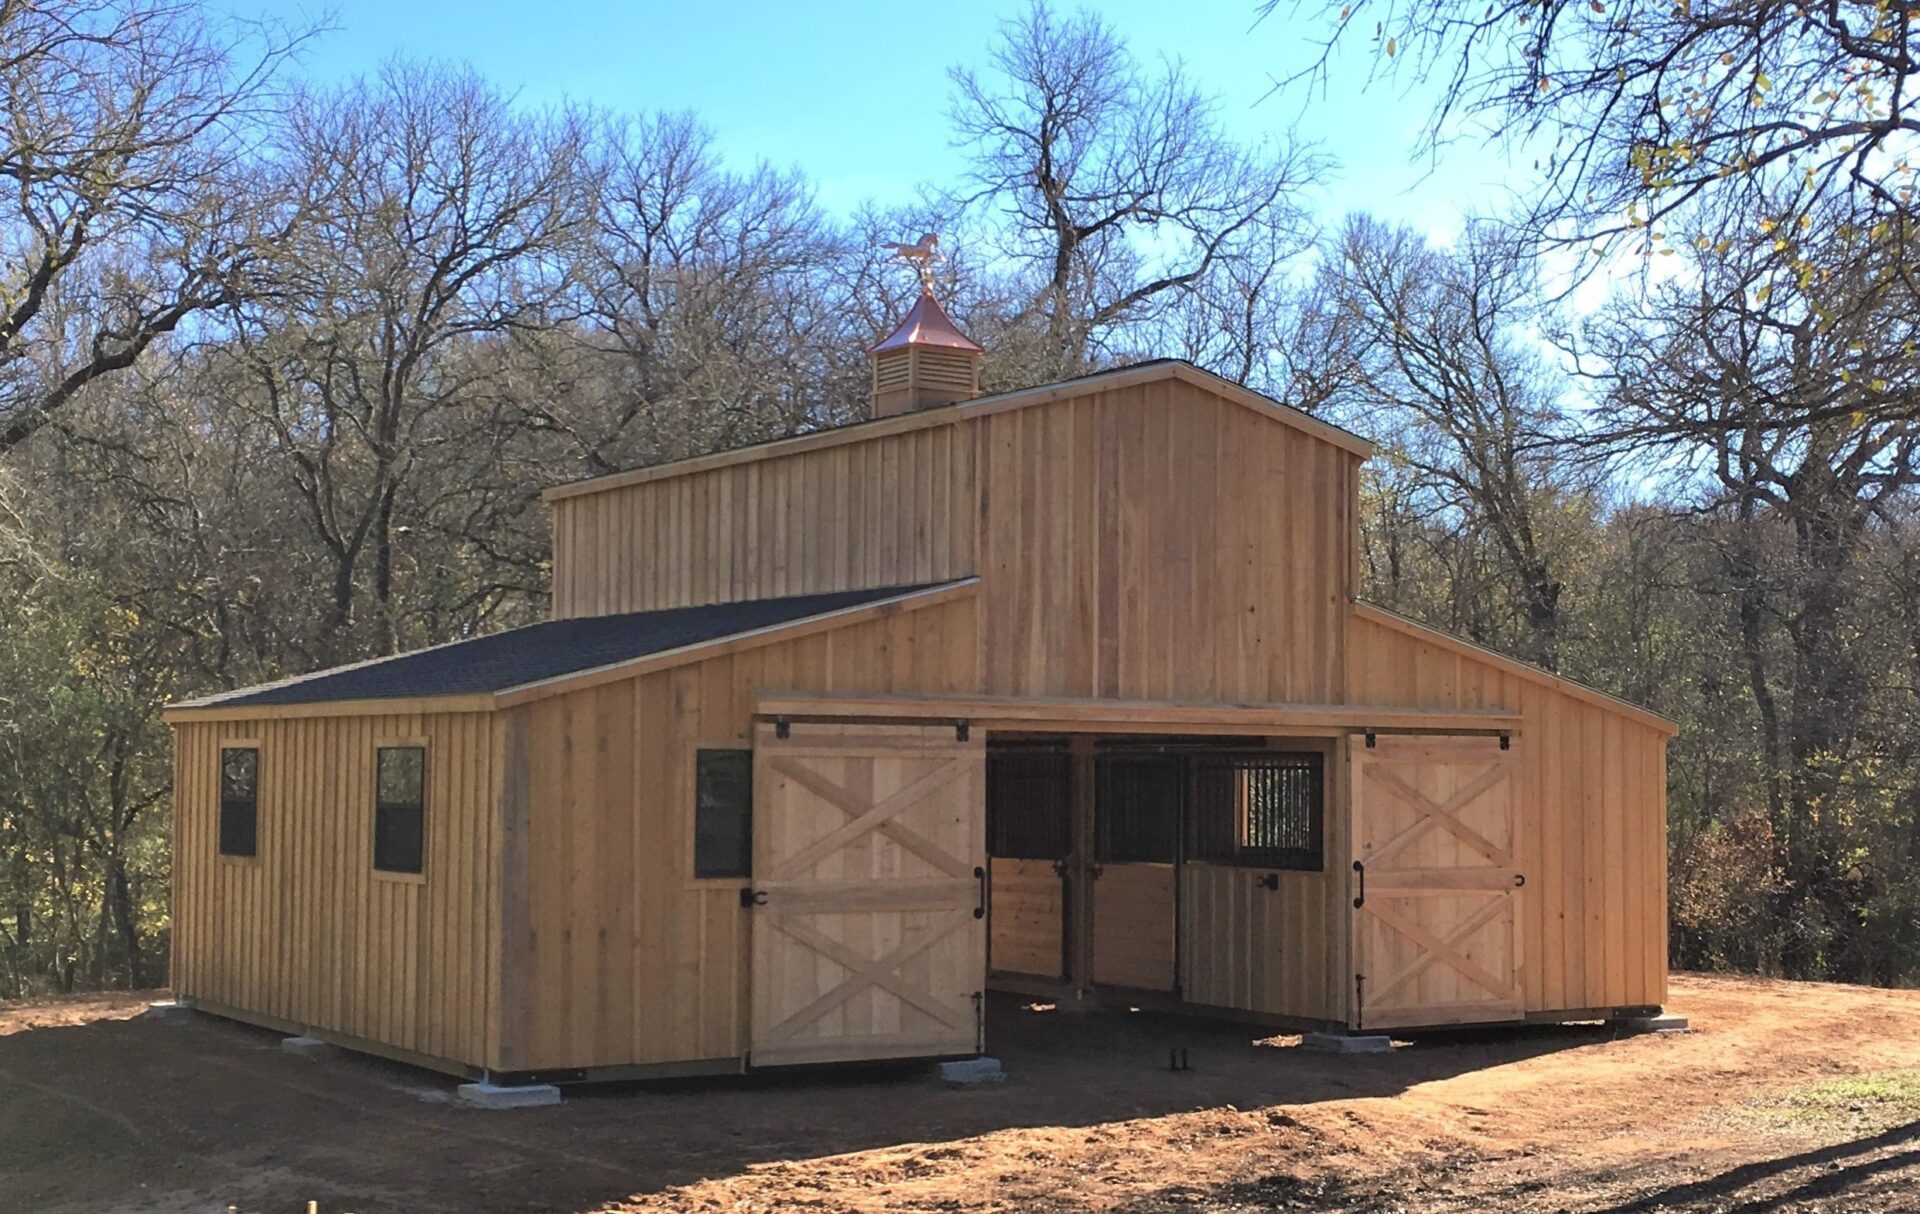 Portable Livestock Aisle Barns for Sale | Deer Creek Structures